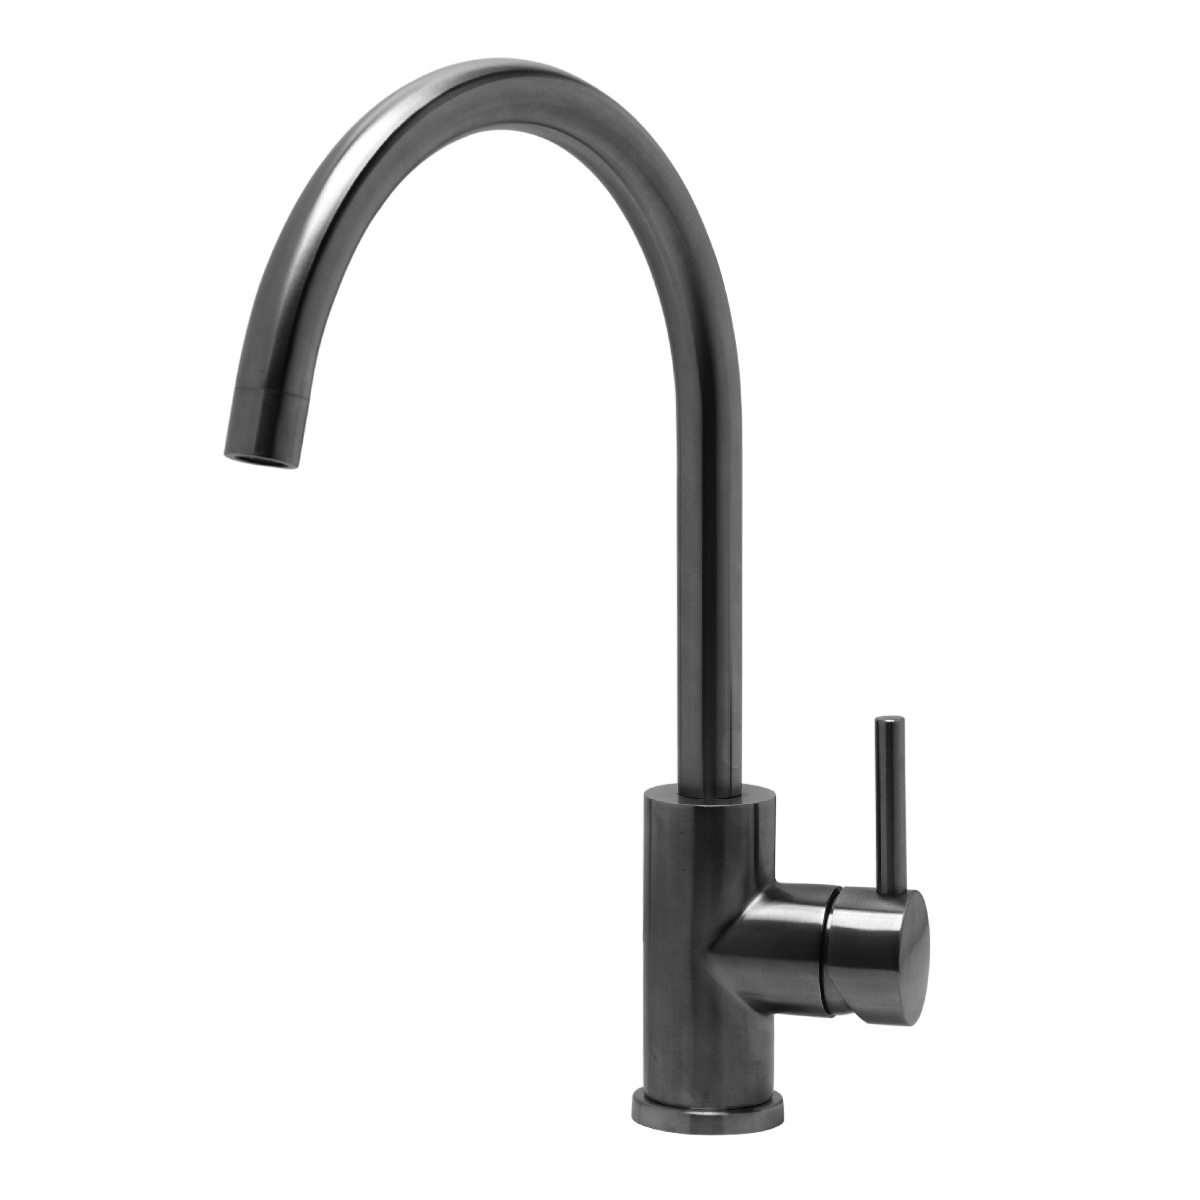 LM5078S Kitchen faucet
with swivel spout